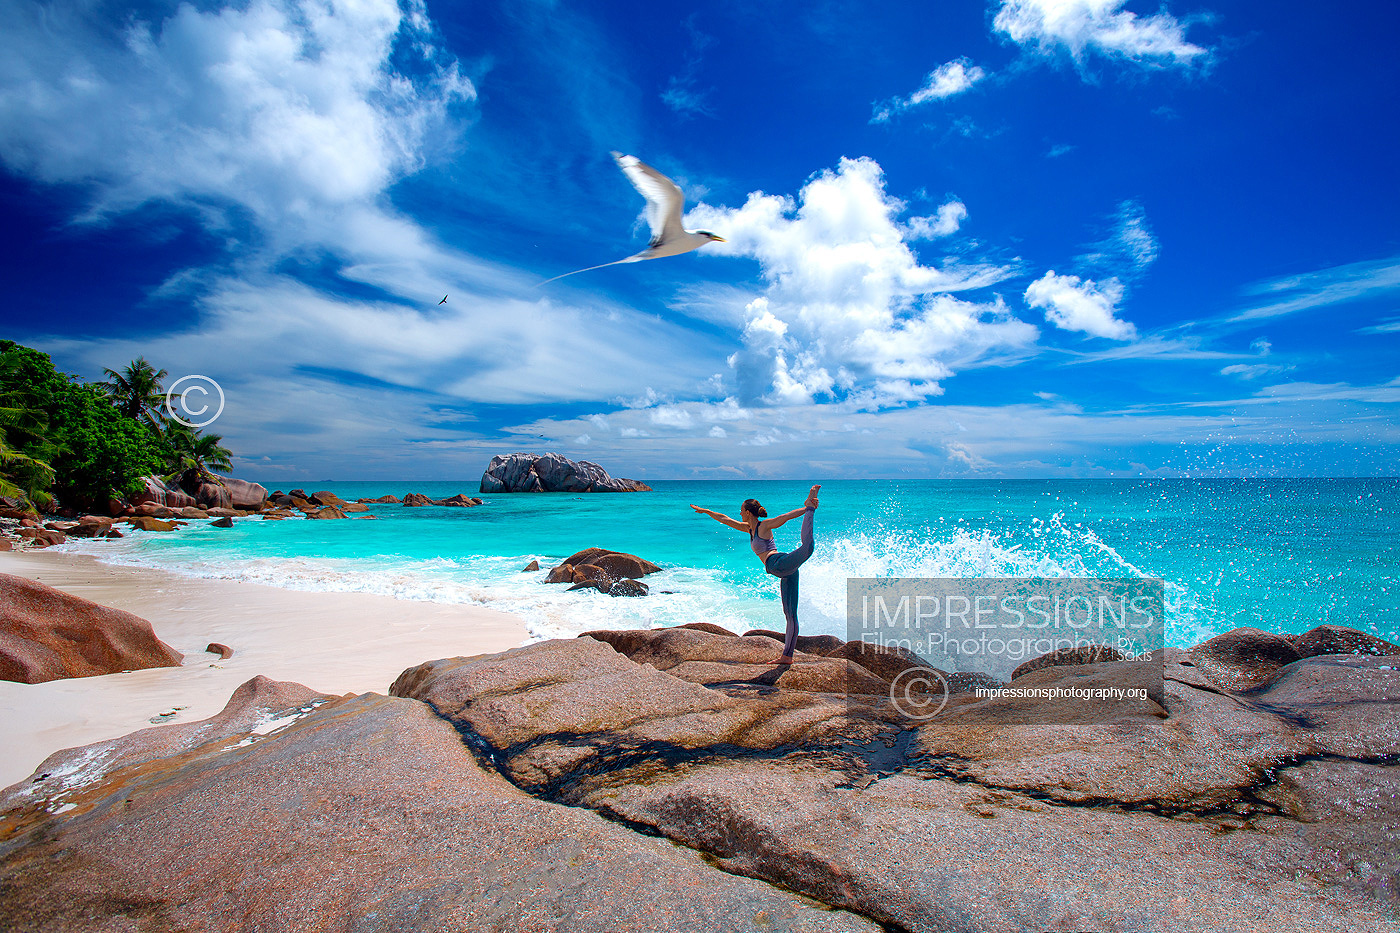 professional Hotel photographer sakis papadopoulos lifestyle photography private island seychelles